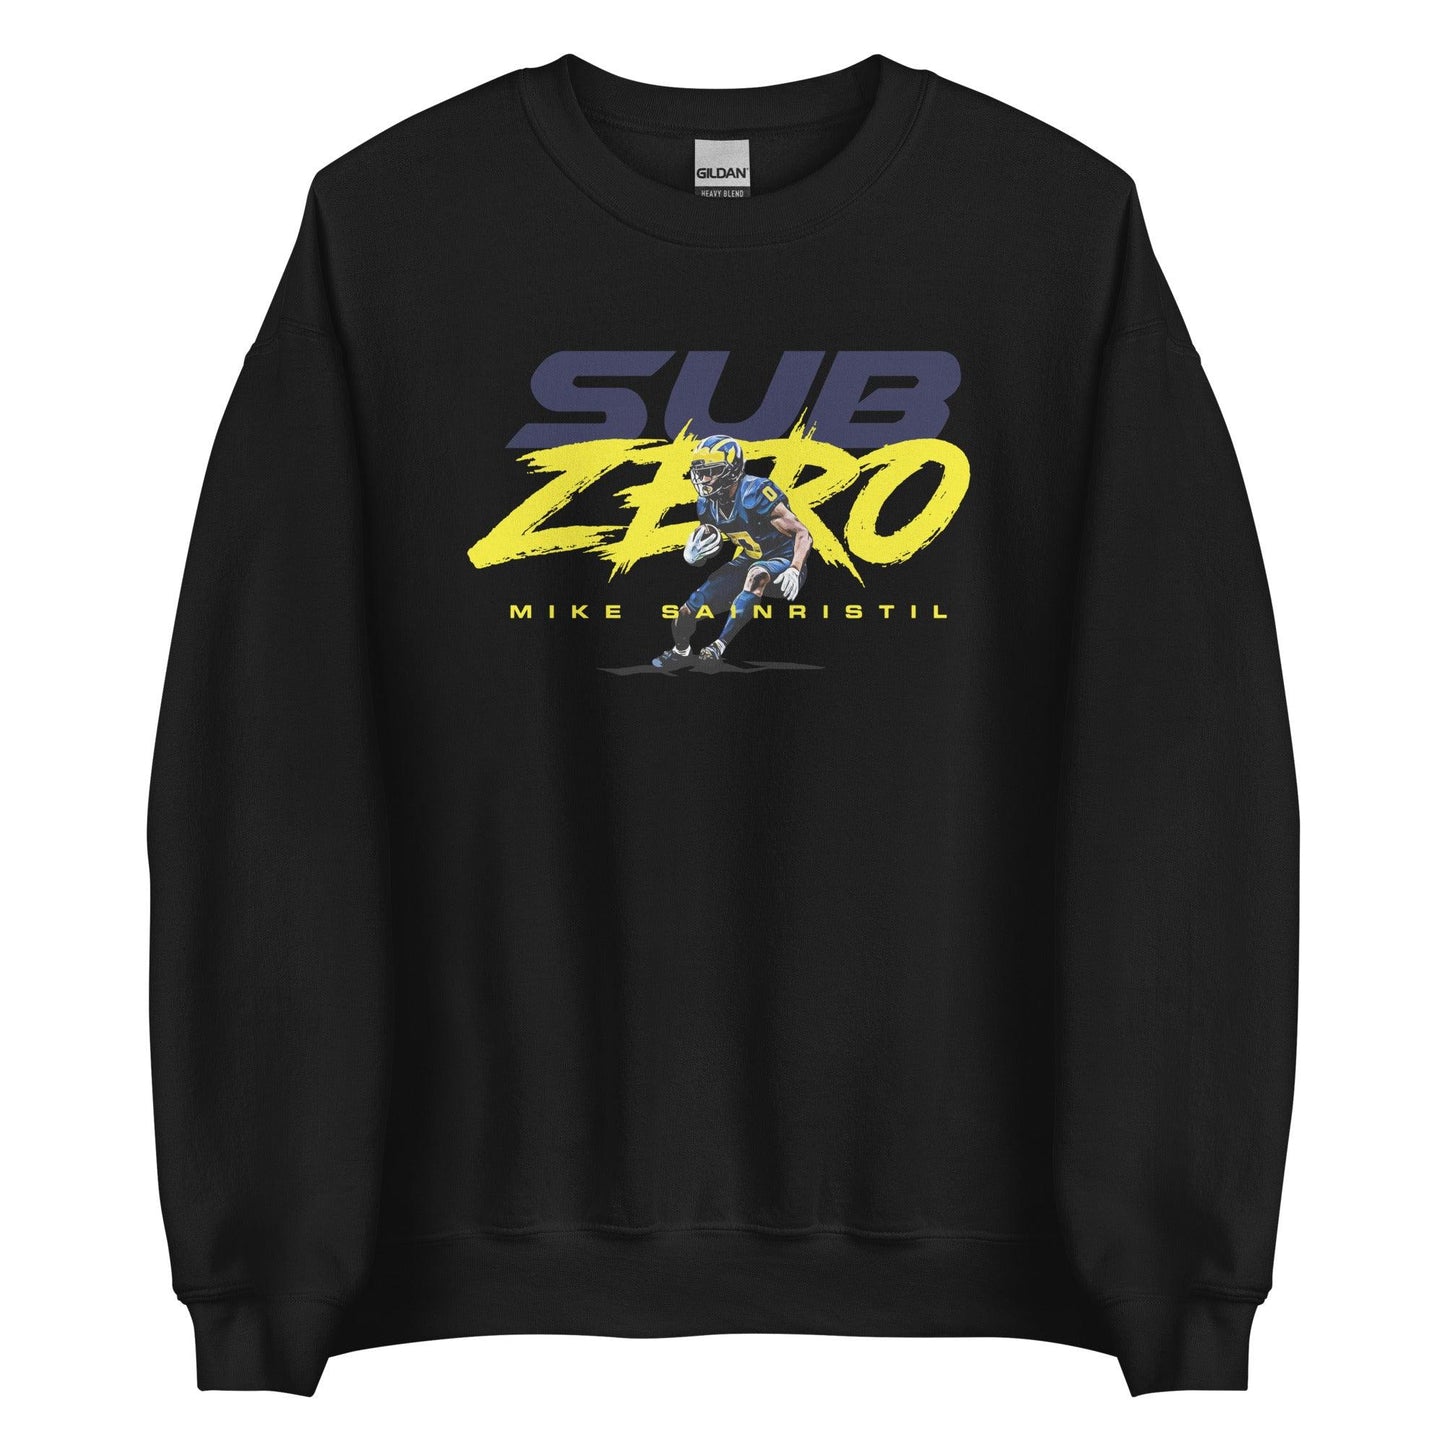 Mike Sainristil "Sub Zero" Sweatshirt - Fan Arch